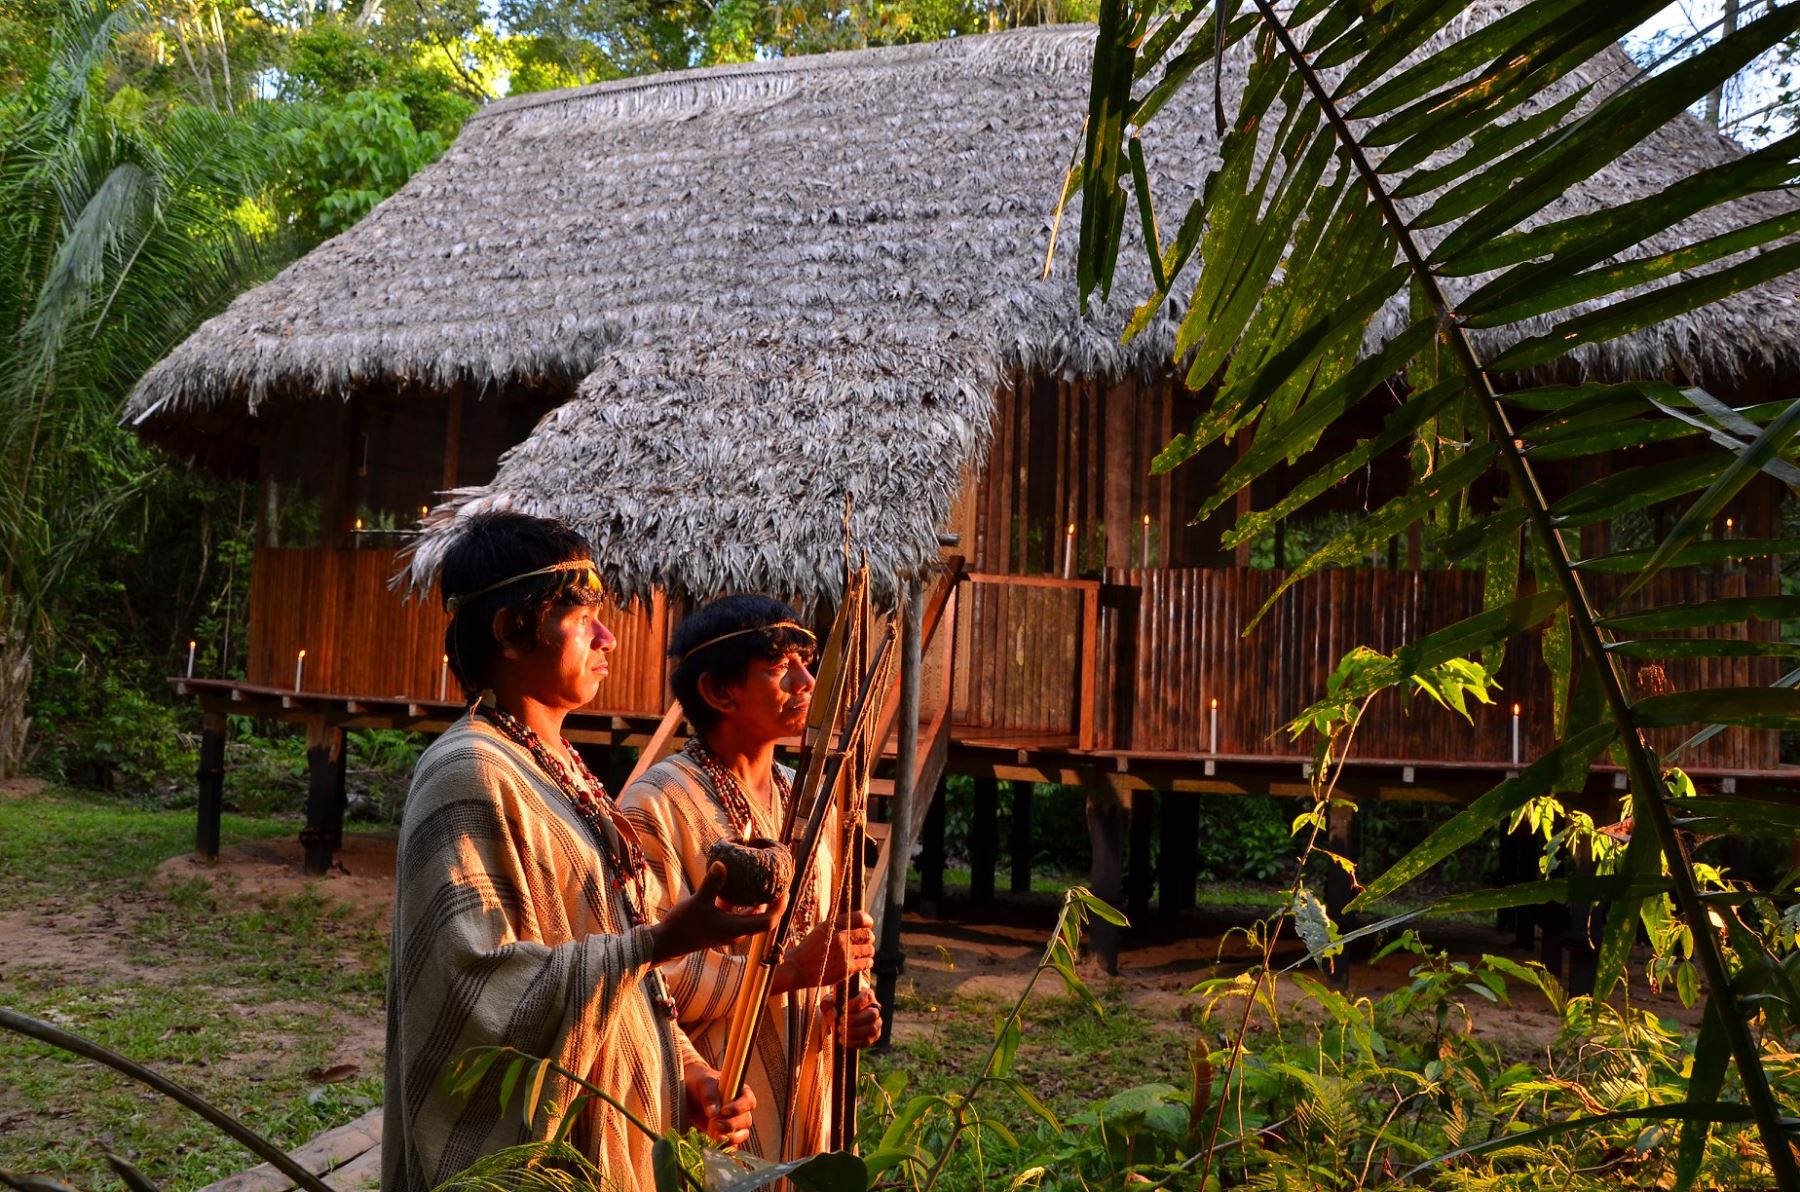 El Parque Nacional del Manu tiene gran importancia cultural porque protege el territorio de varios grupos étnicos. Foto: ANDINA/Sernanp.